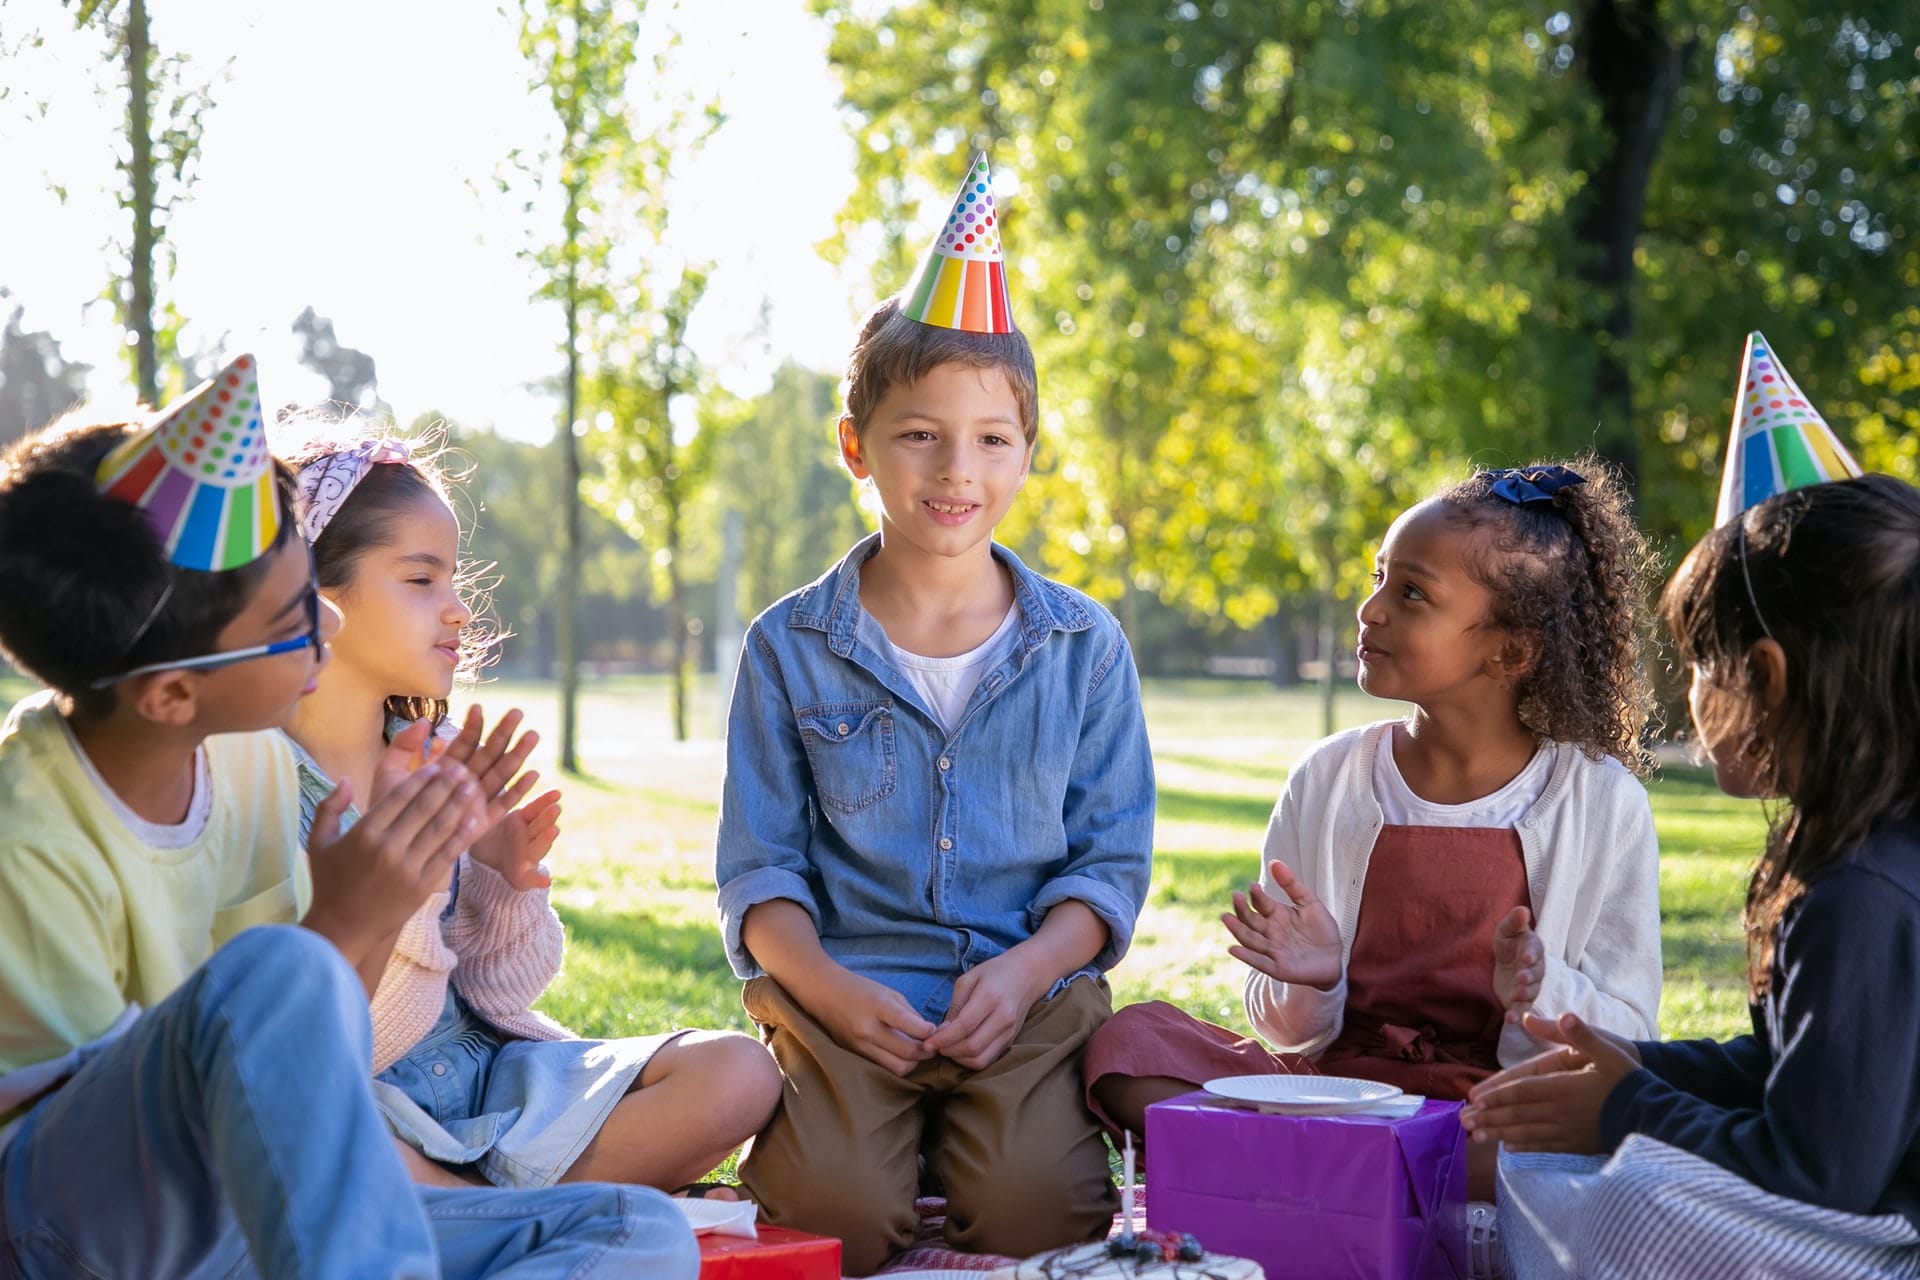 Kids Celebrating a Birthday in a Park